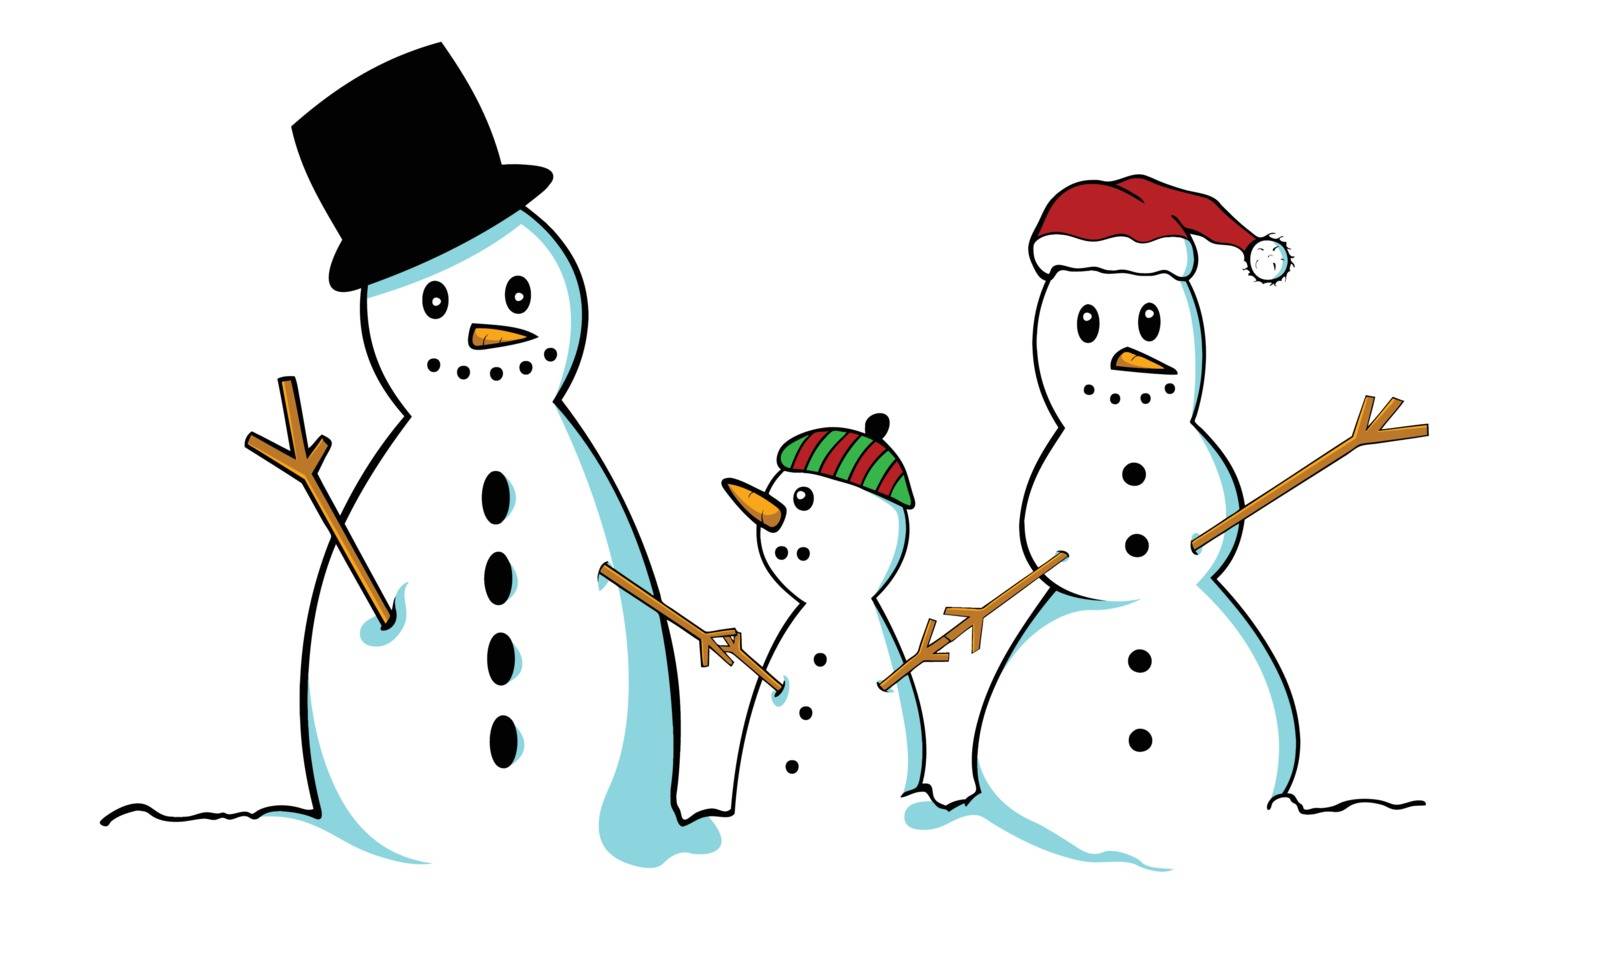 snowman family illustration isolated